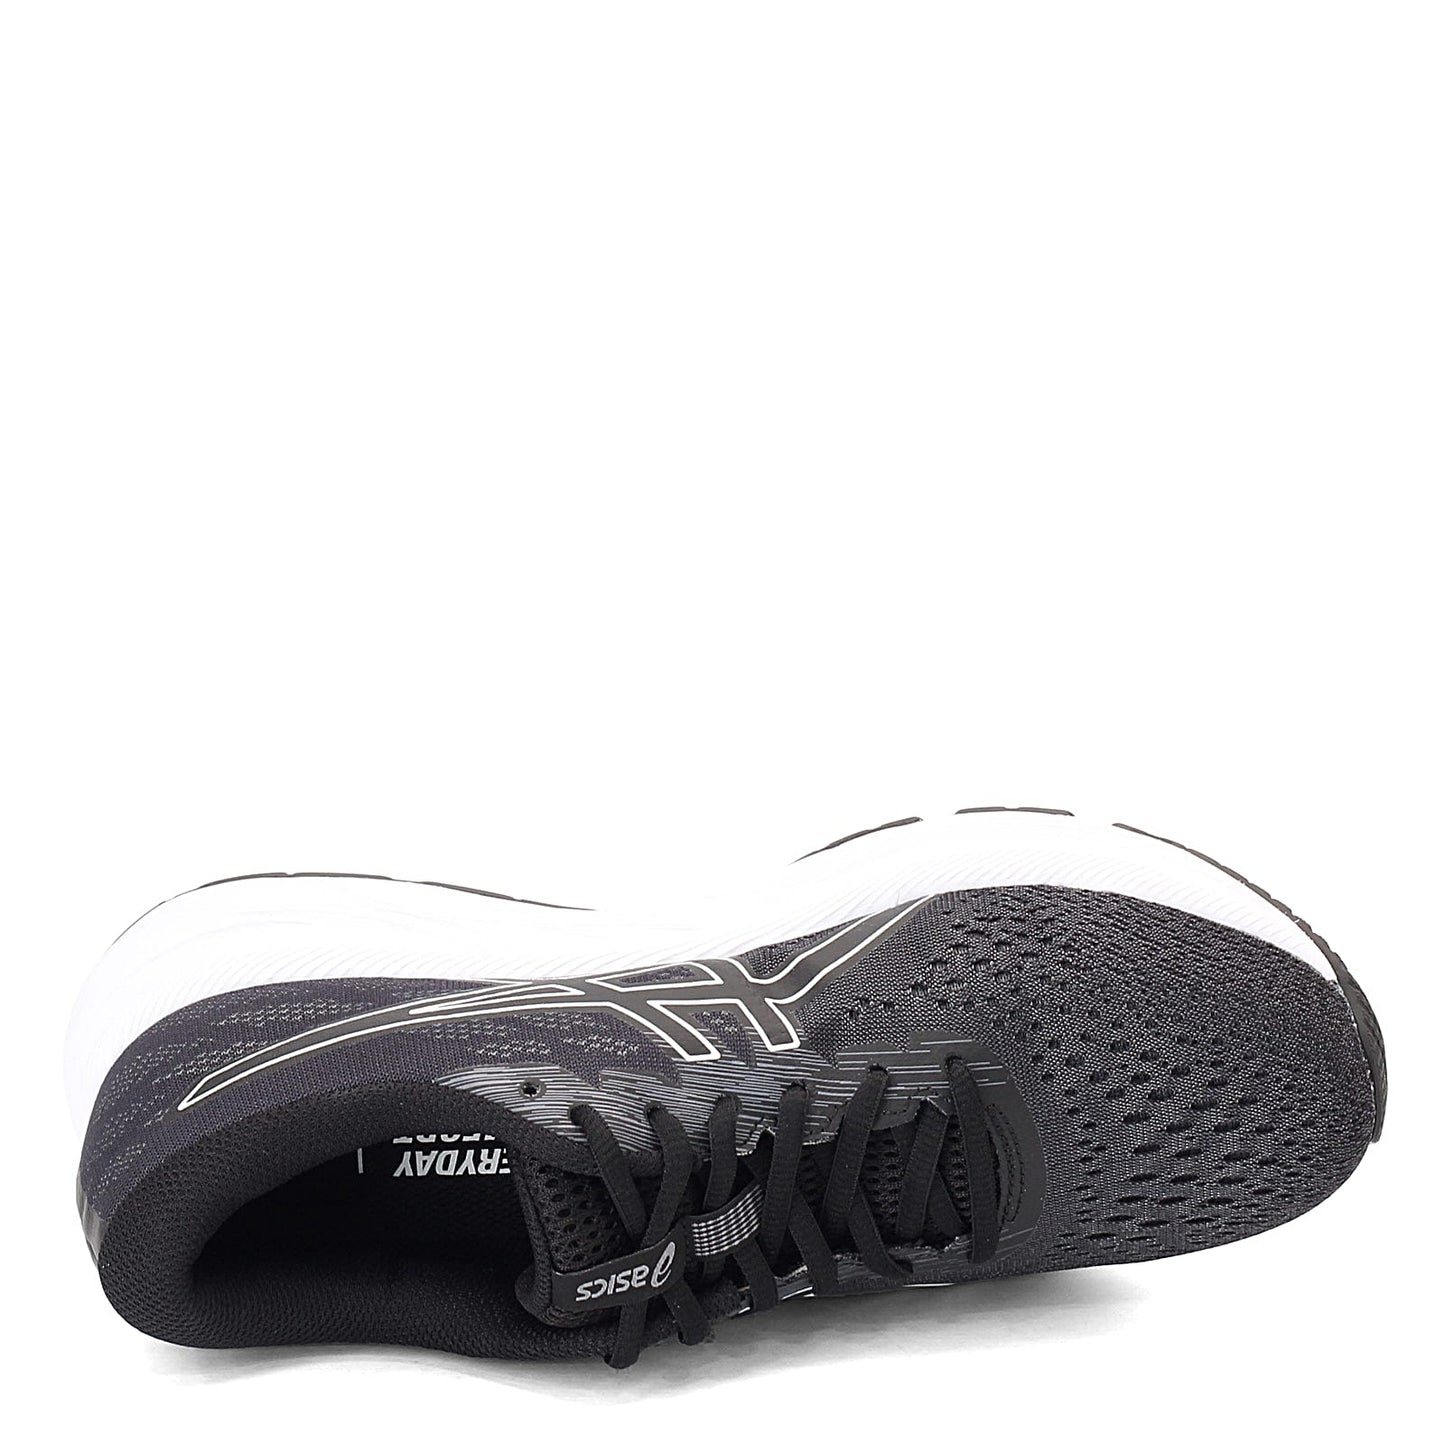 Peltz Shoes  Men's ASICS GEL-Excite 7 Running Shoe - Extra Wide